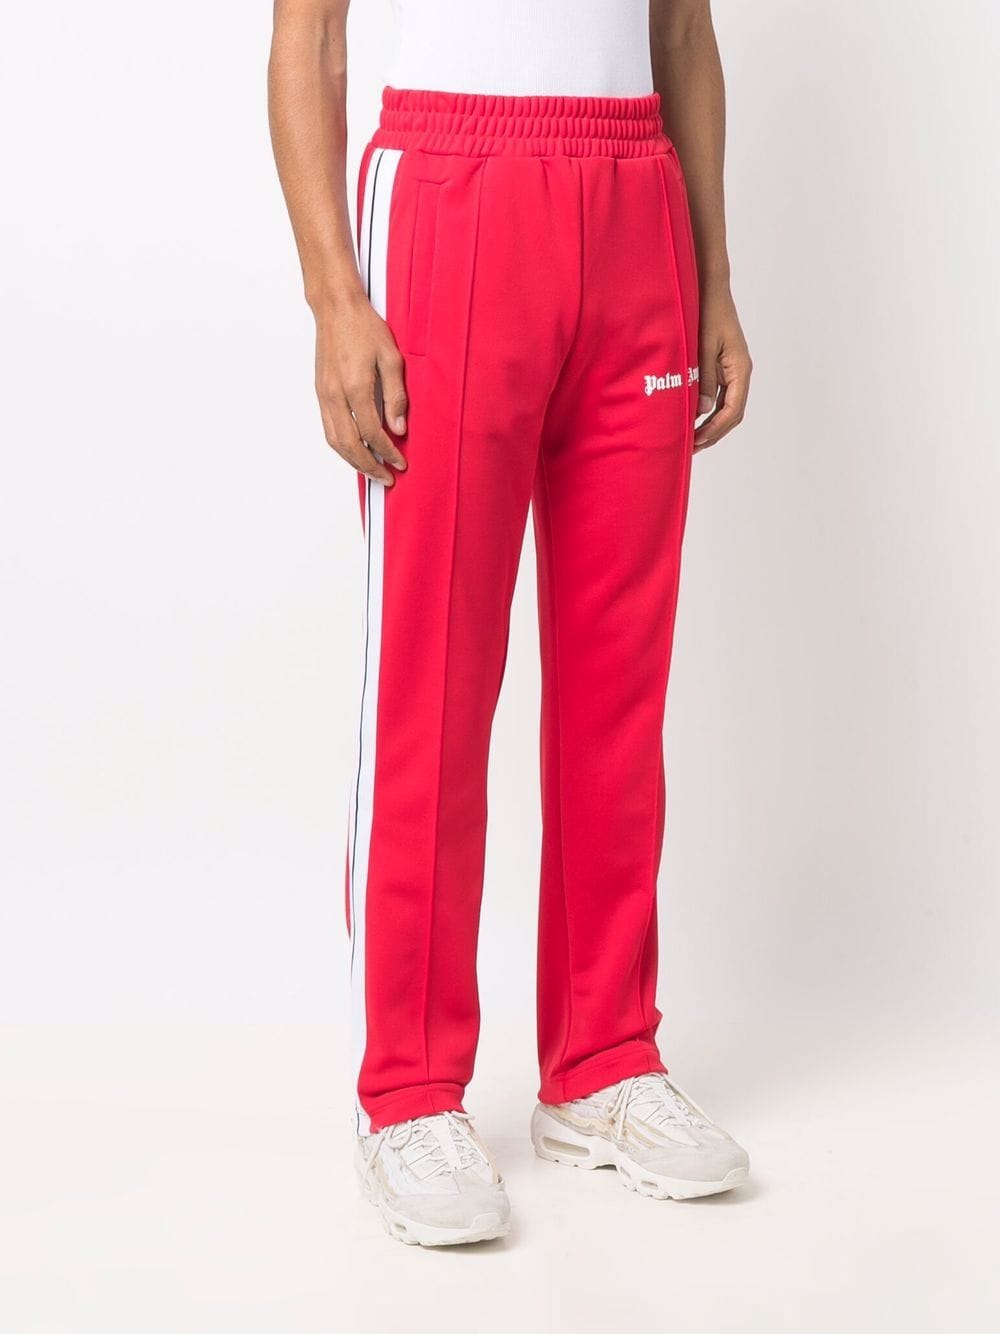 Nike Basketball DriFIT sweatpants in red  ASOS